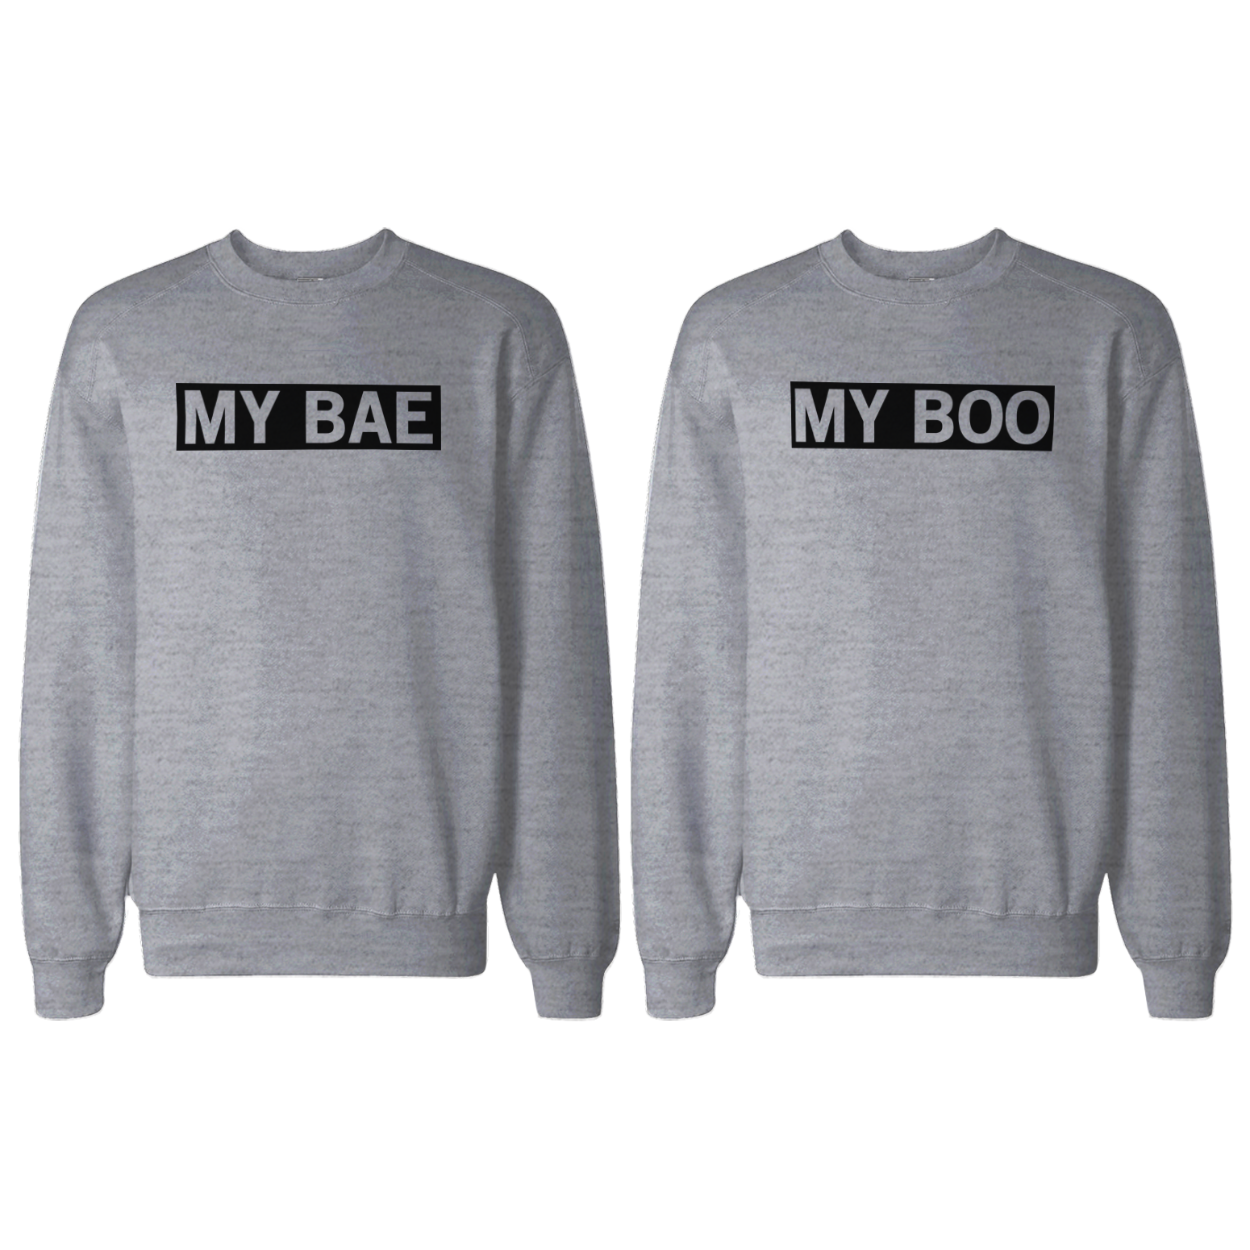 My Bae And My Boo Matching Sweatshirts